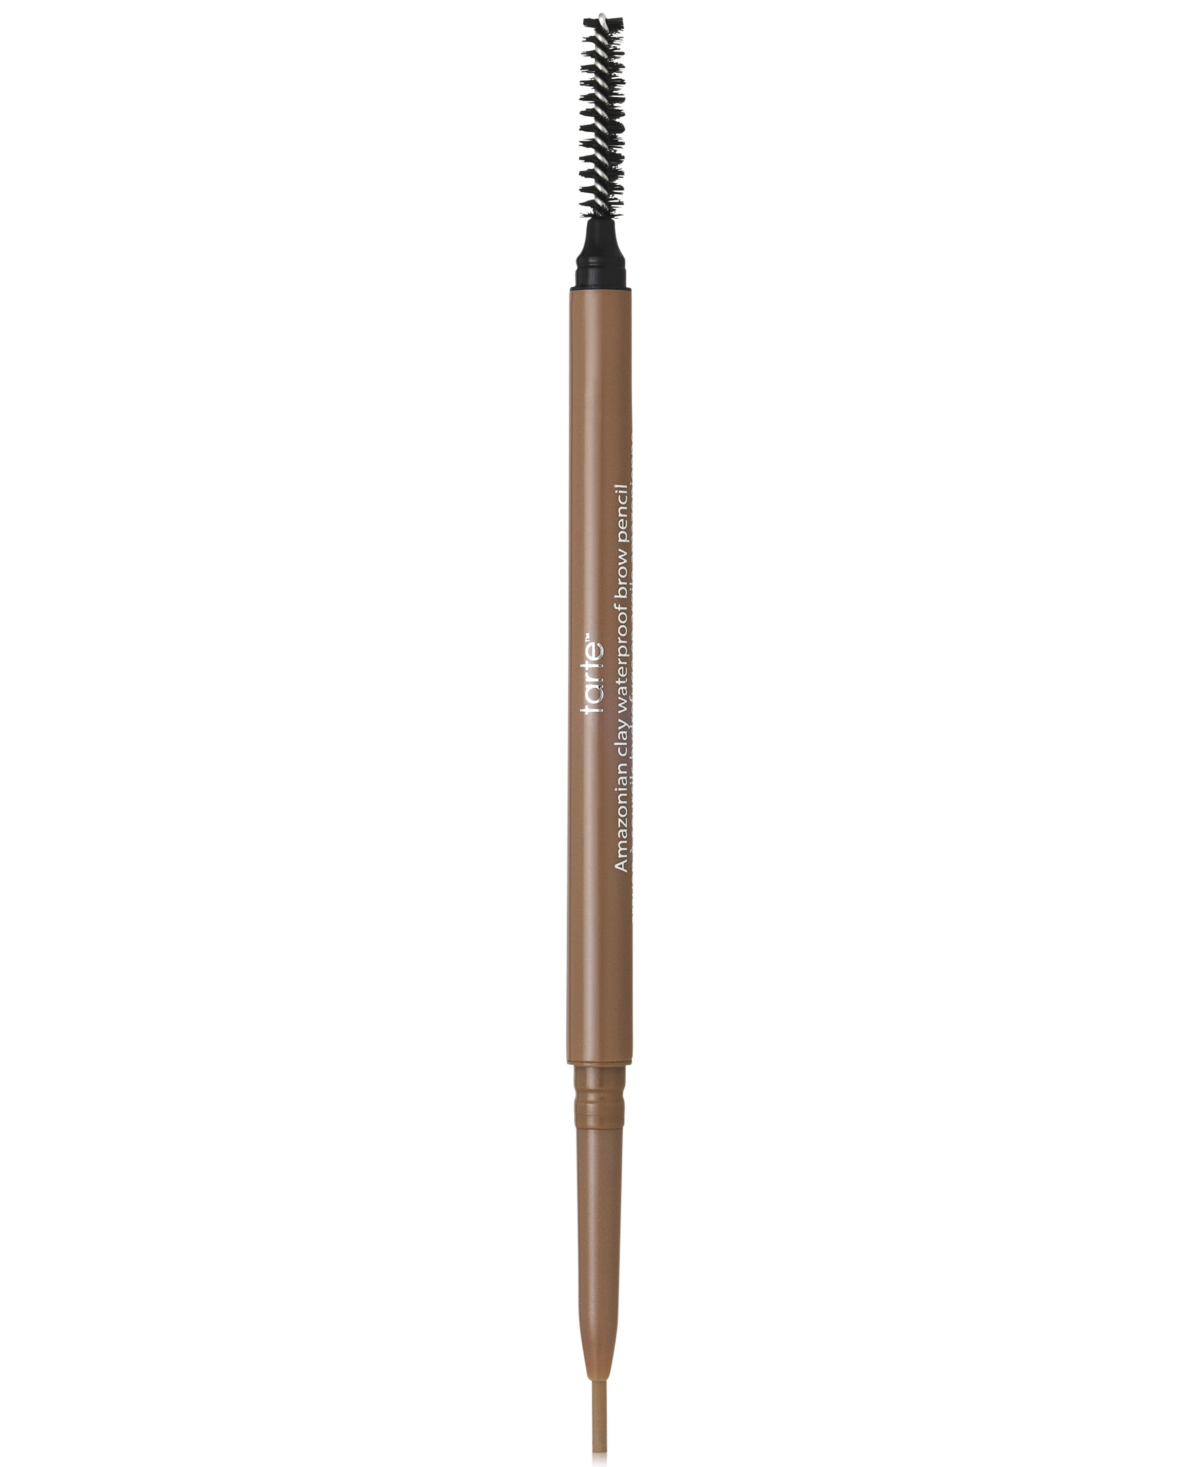 Amazonian Clay Waterproof Eyebrow Pencil - rich brown